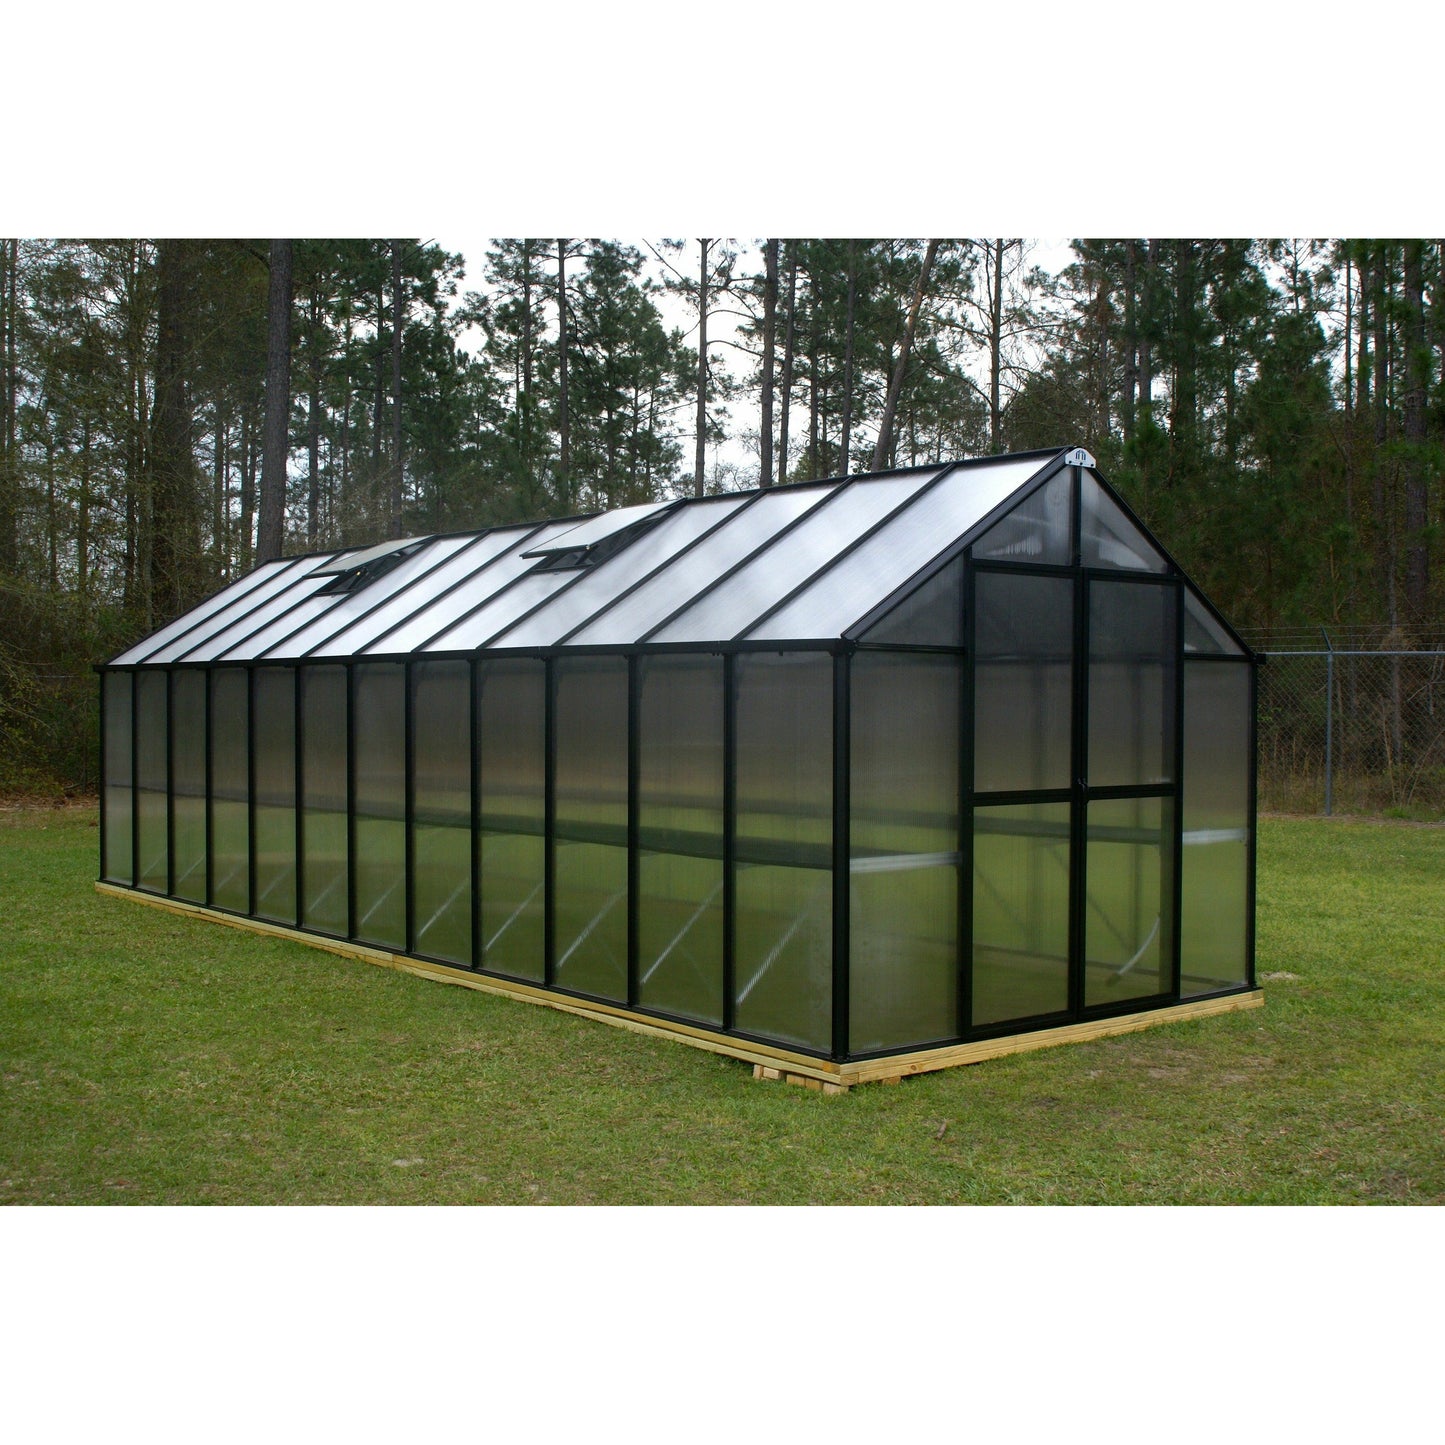 Mont Greenhouse 8FTx 24FT - Black Finish - Premium Package MONT-24-BK-PREMIUM